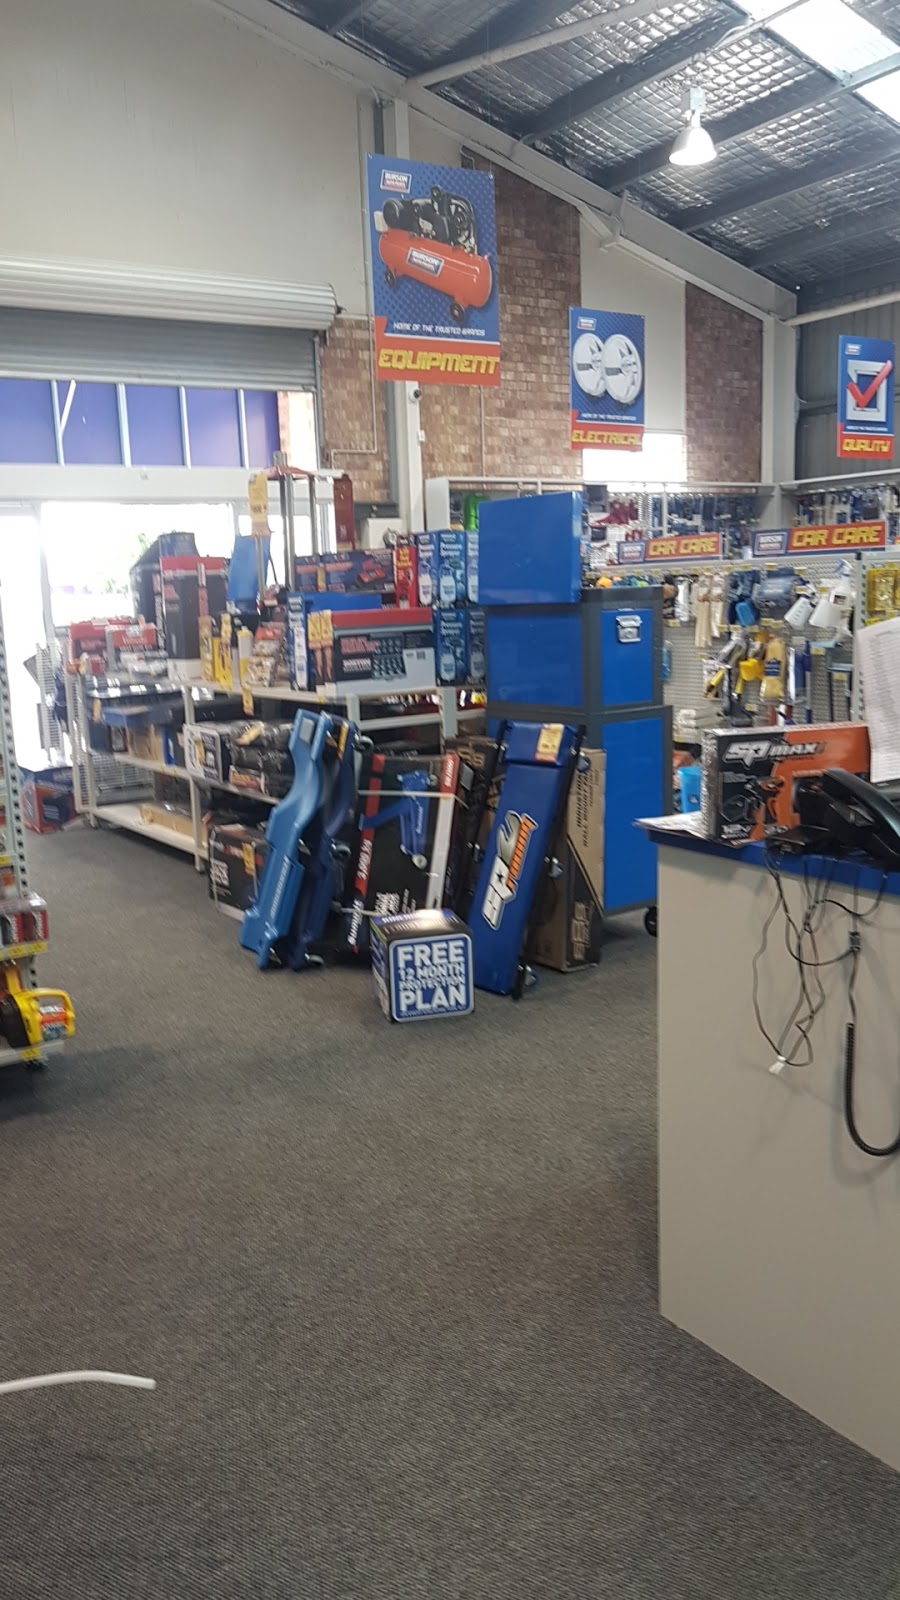 Burson Auto Parts | car repair | 8 Silo Rd, Atherton QLD 4883, Australia | 0740897100 OR +61 7 4089 7100